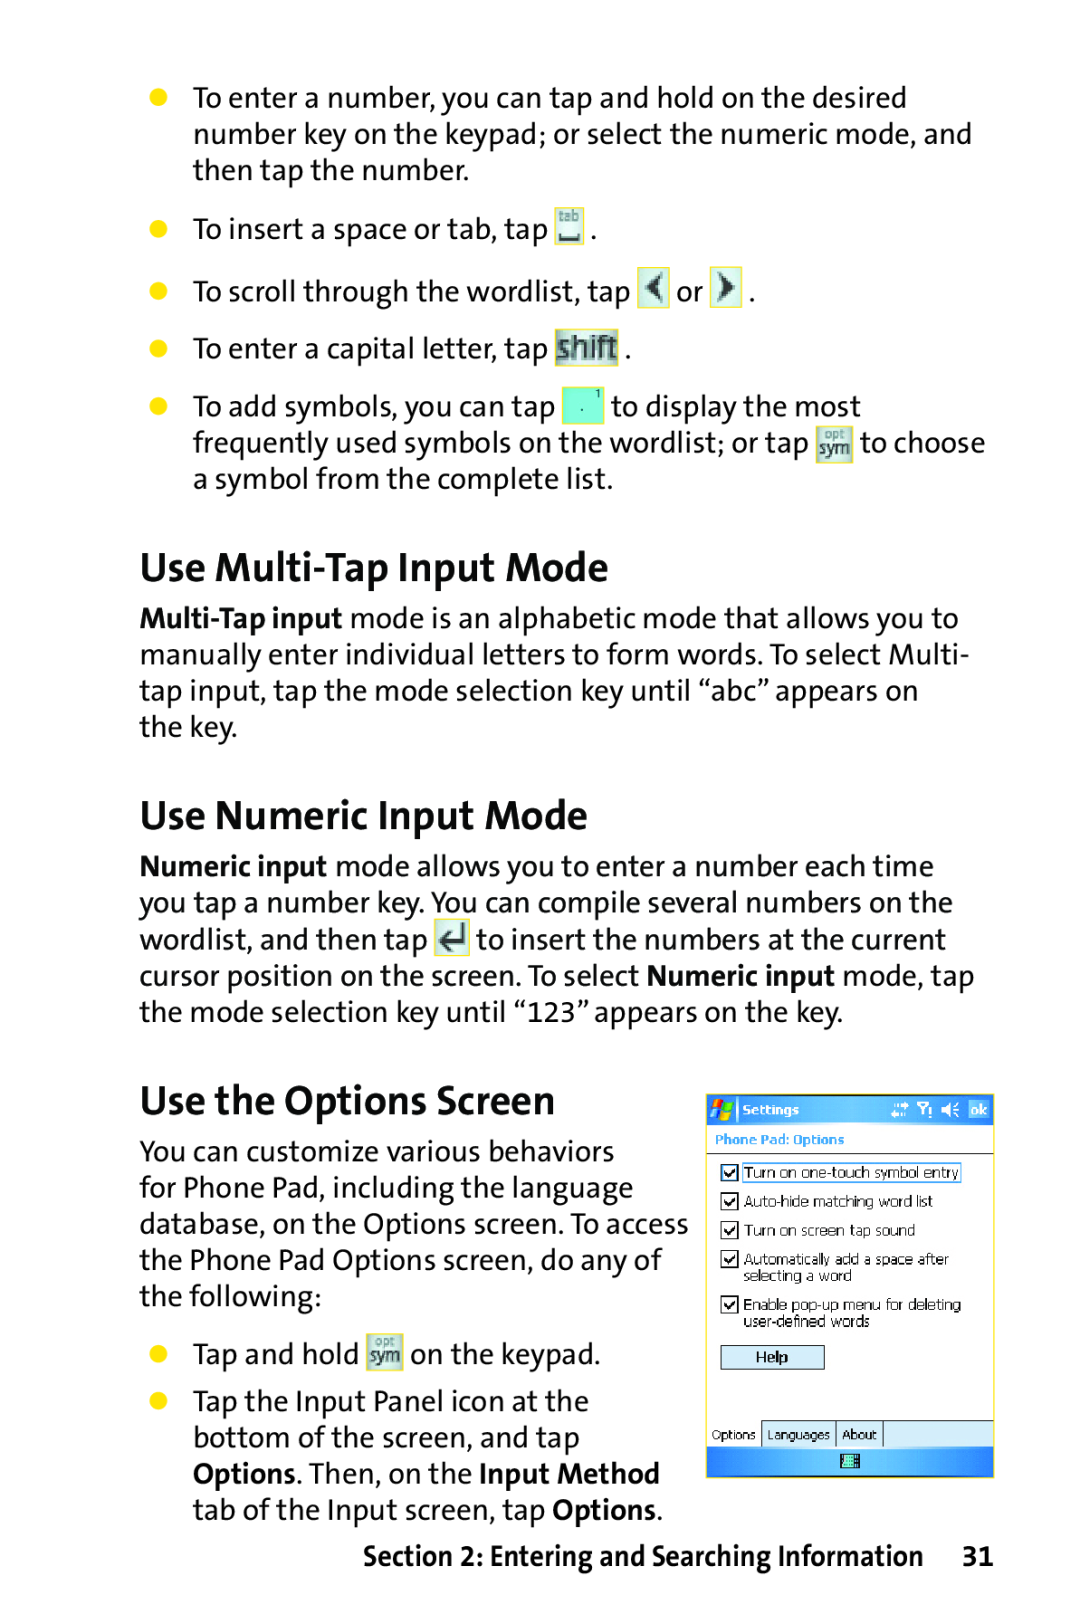 Sprint Nextel PPC-6700 manual Use Multi-Tap Input Mode, Use Numeric Input Mode, Use the Options Screen 